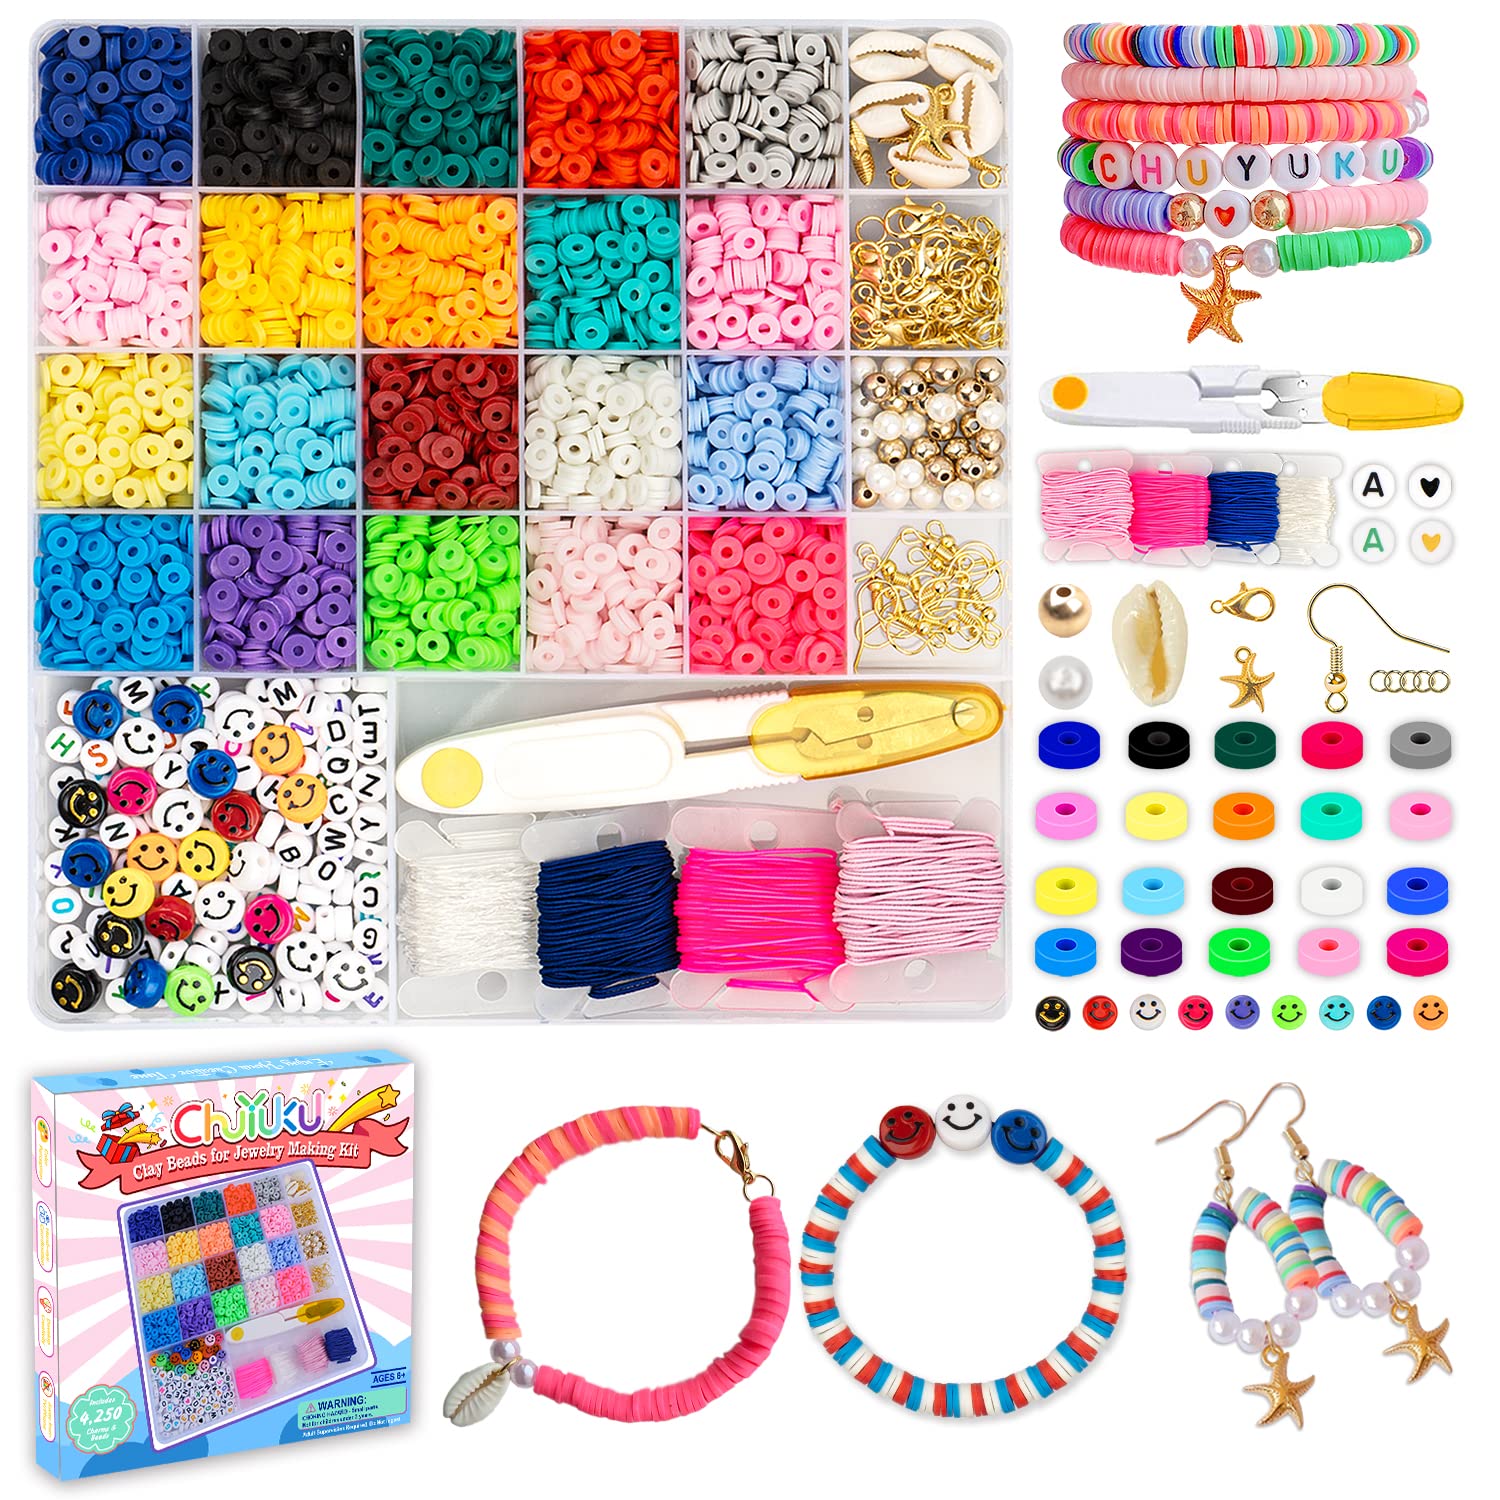 Aurldpio Bracelet Making Craft Kit for Girls,Jewelry Making Supplies Beads Char